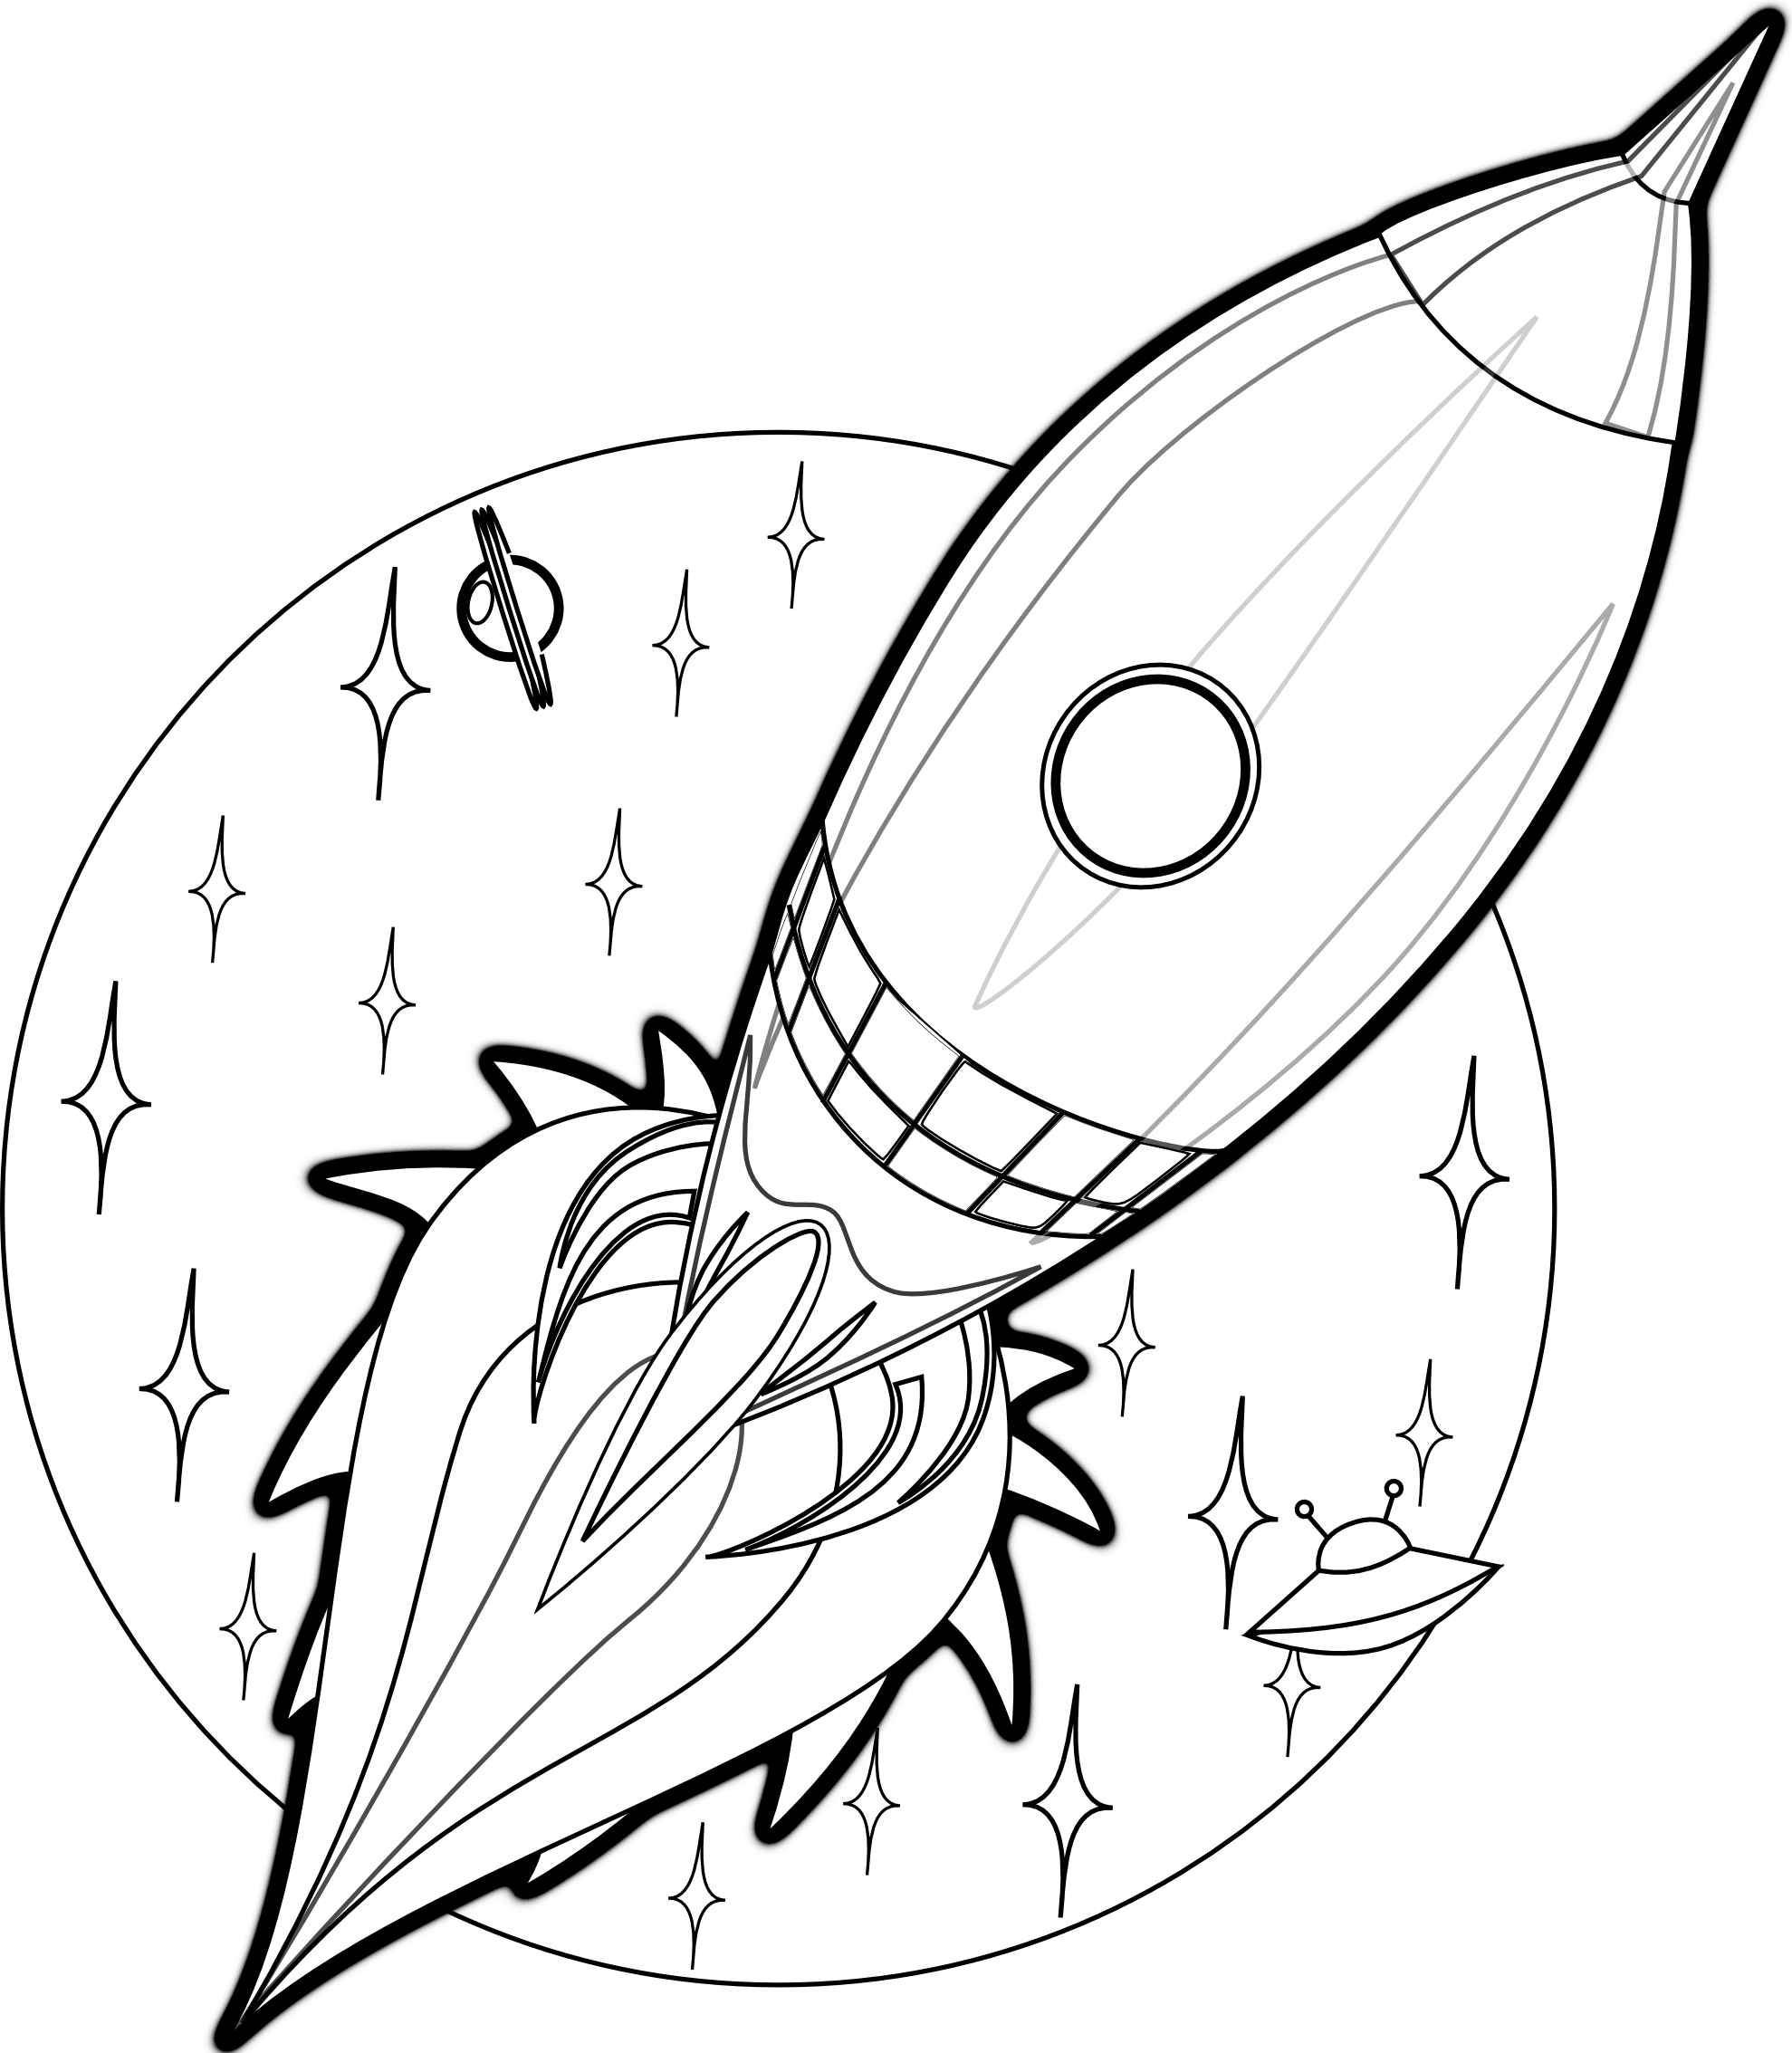 Rocket Ship Coloring Page